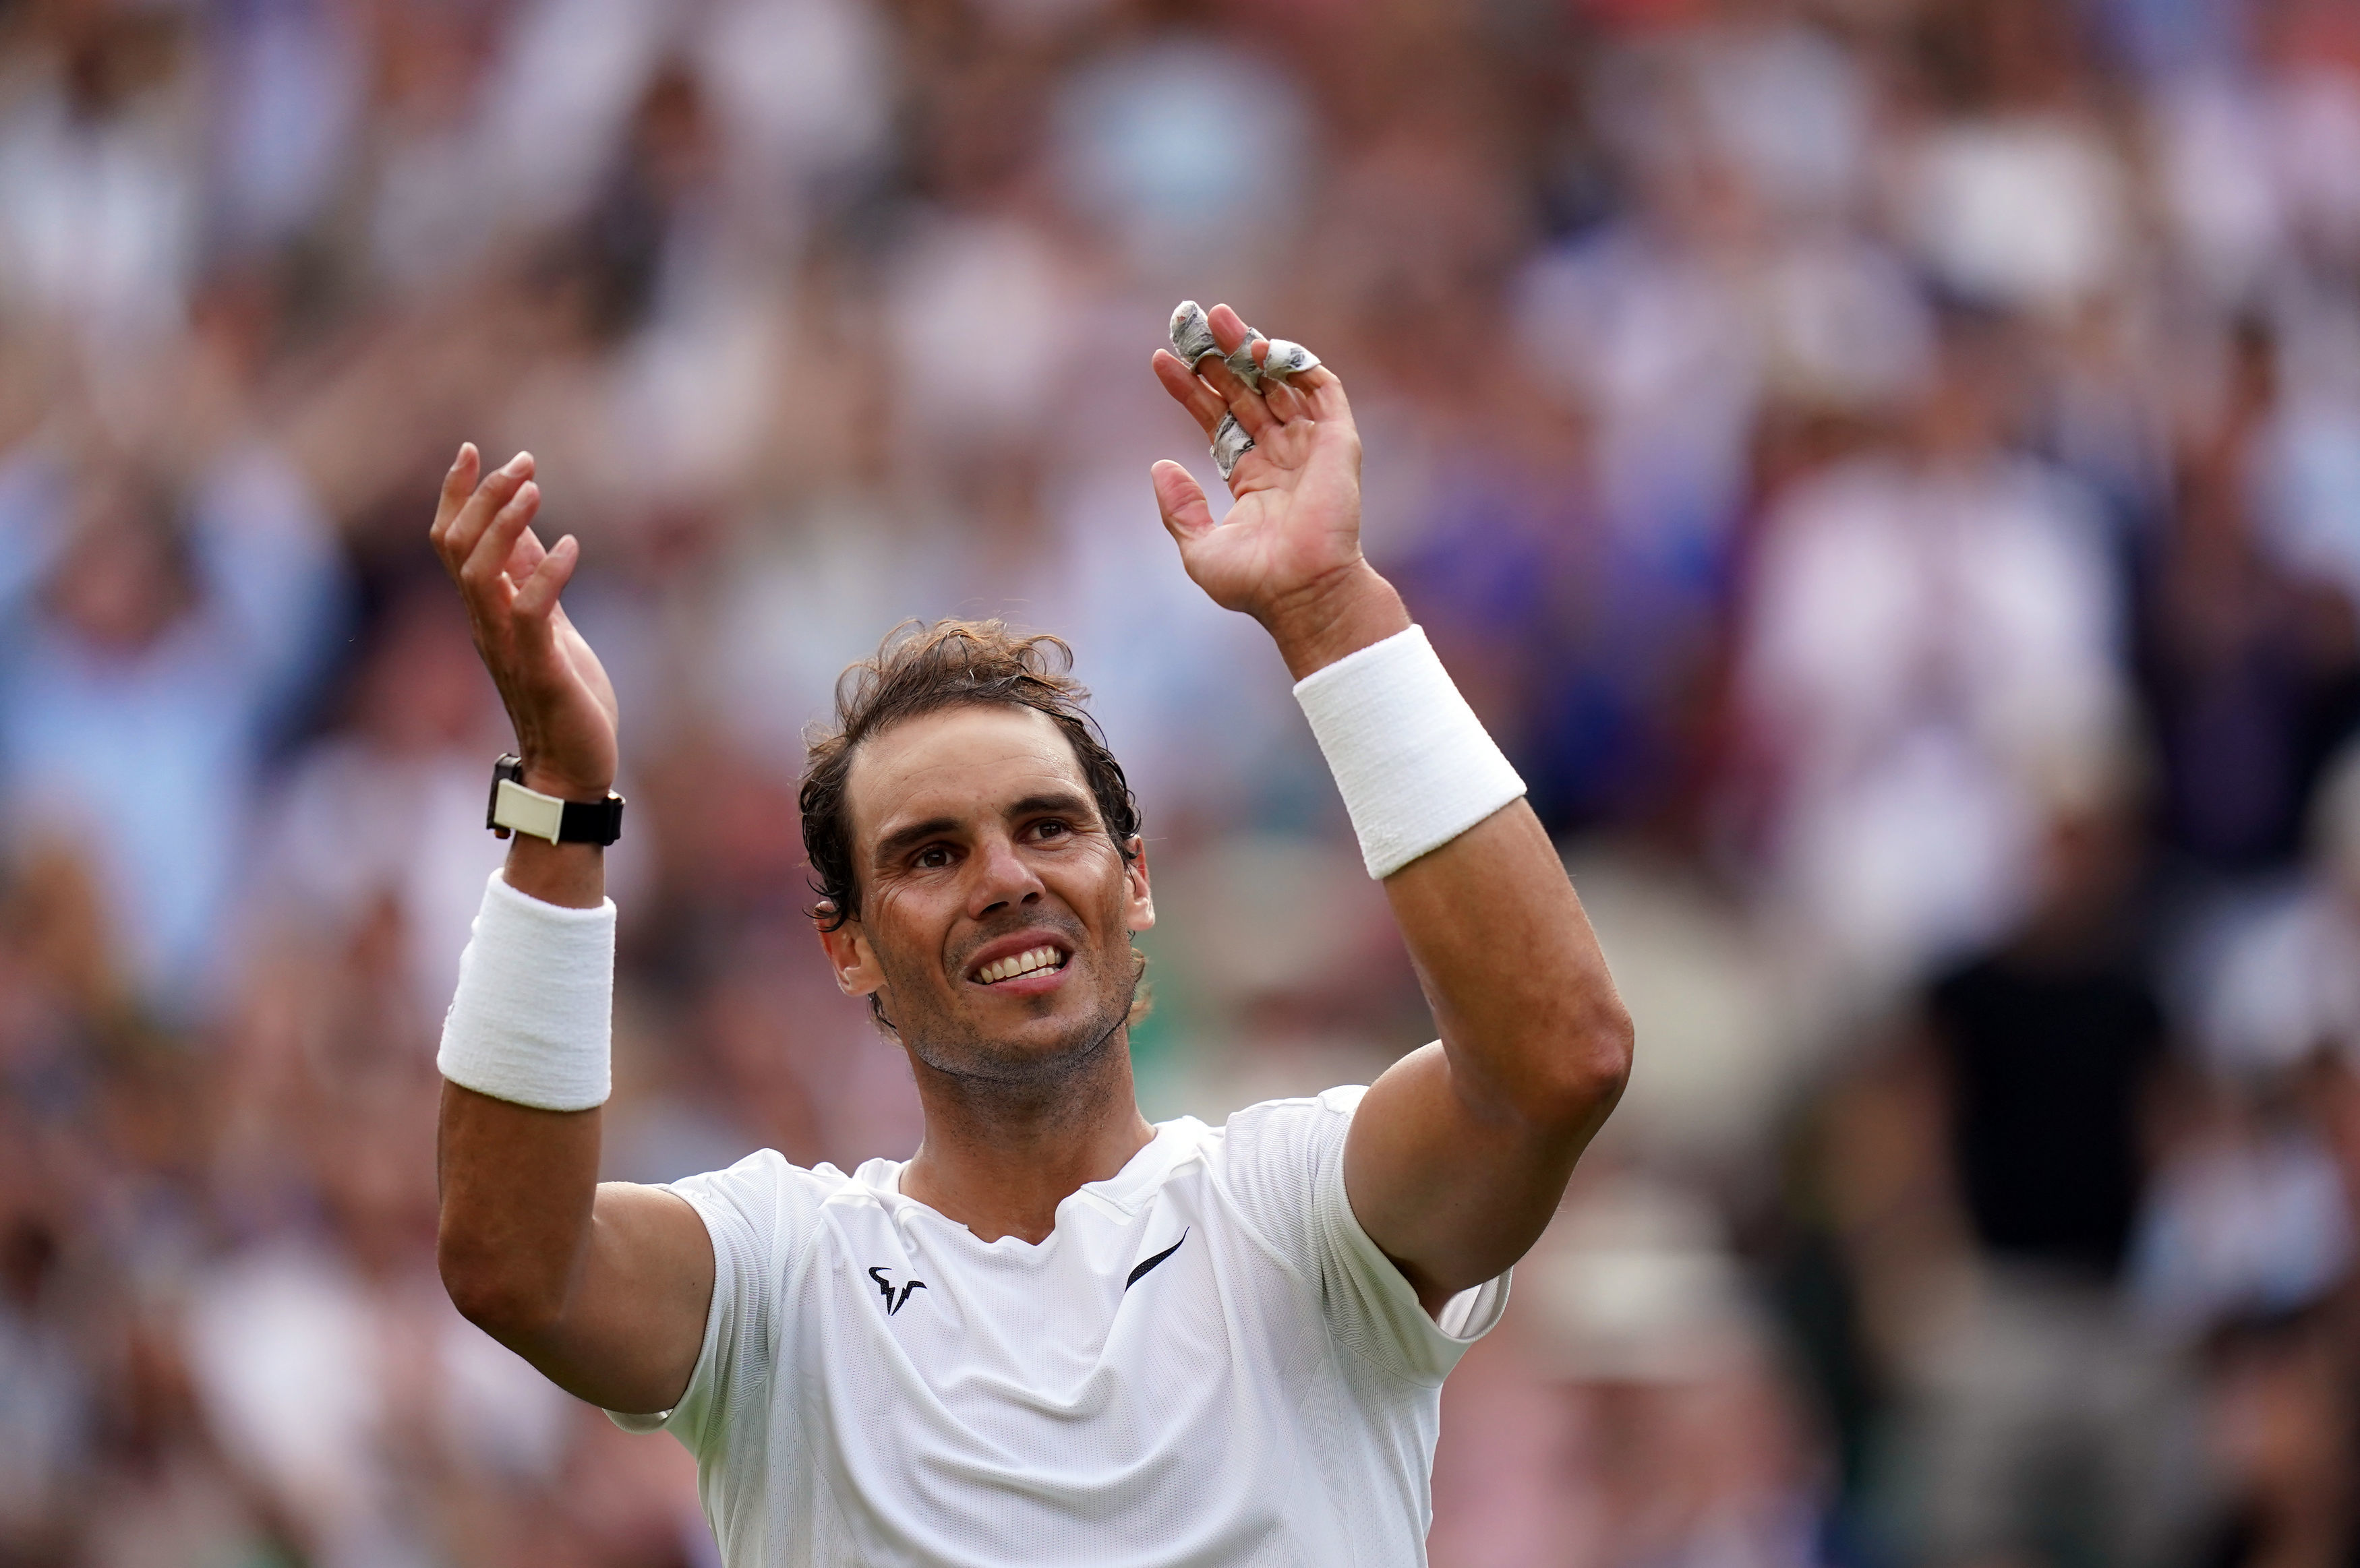 Wimbledon 2022 LIVE Watch Rafael Nadal and Simona Halep on Centre Court - Live